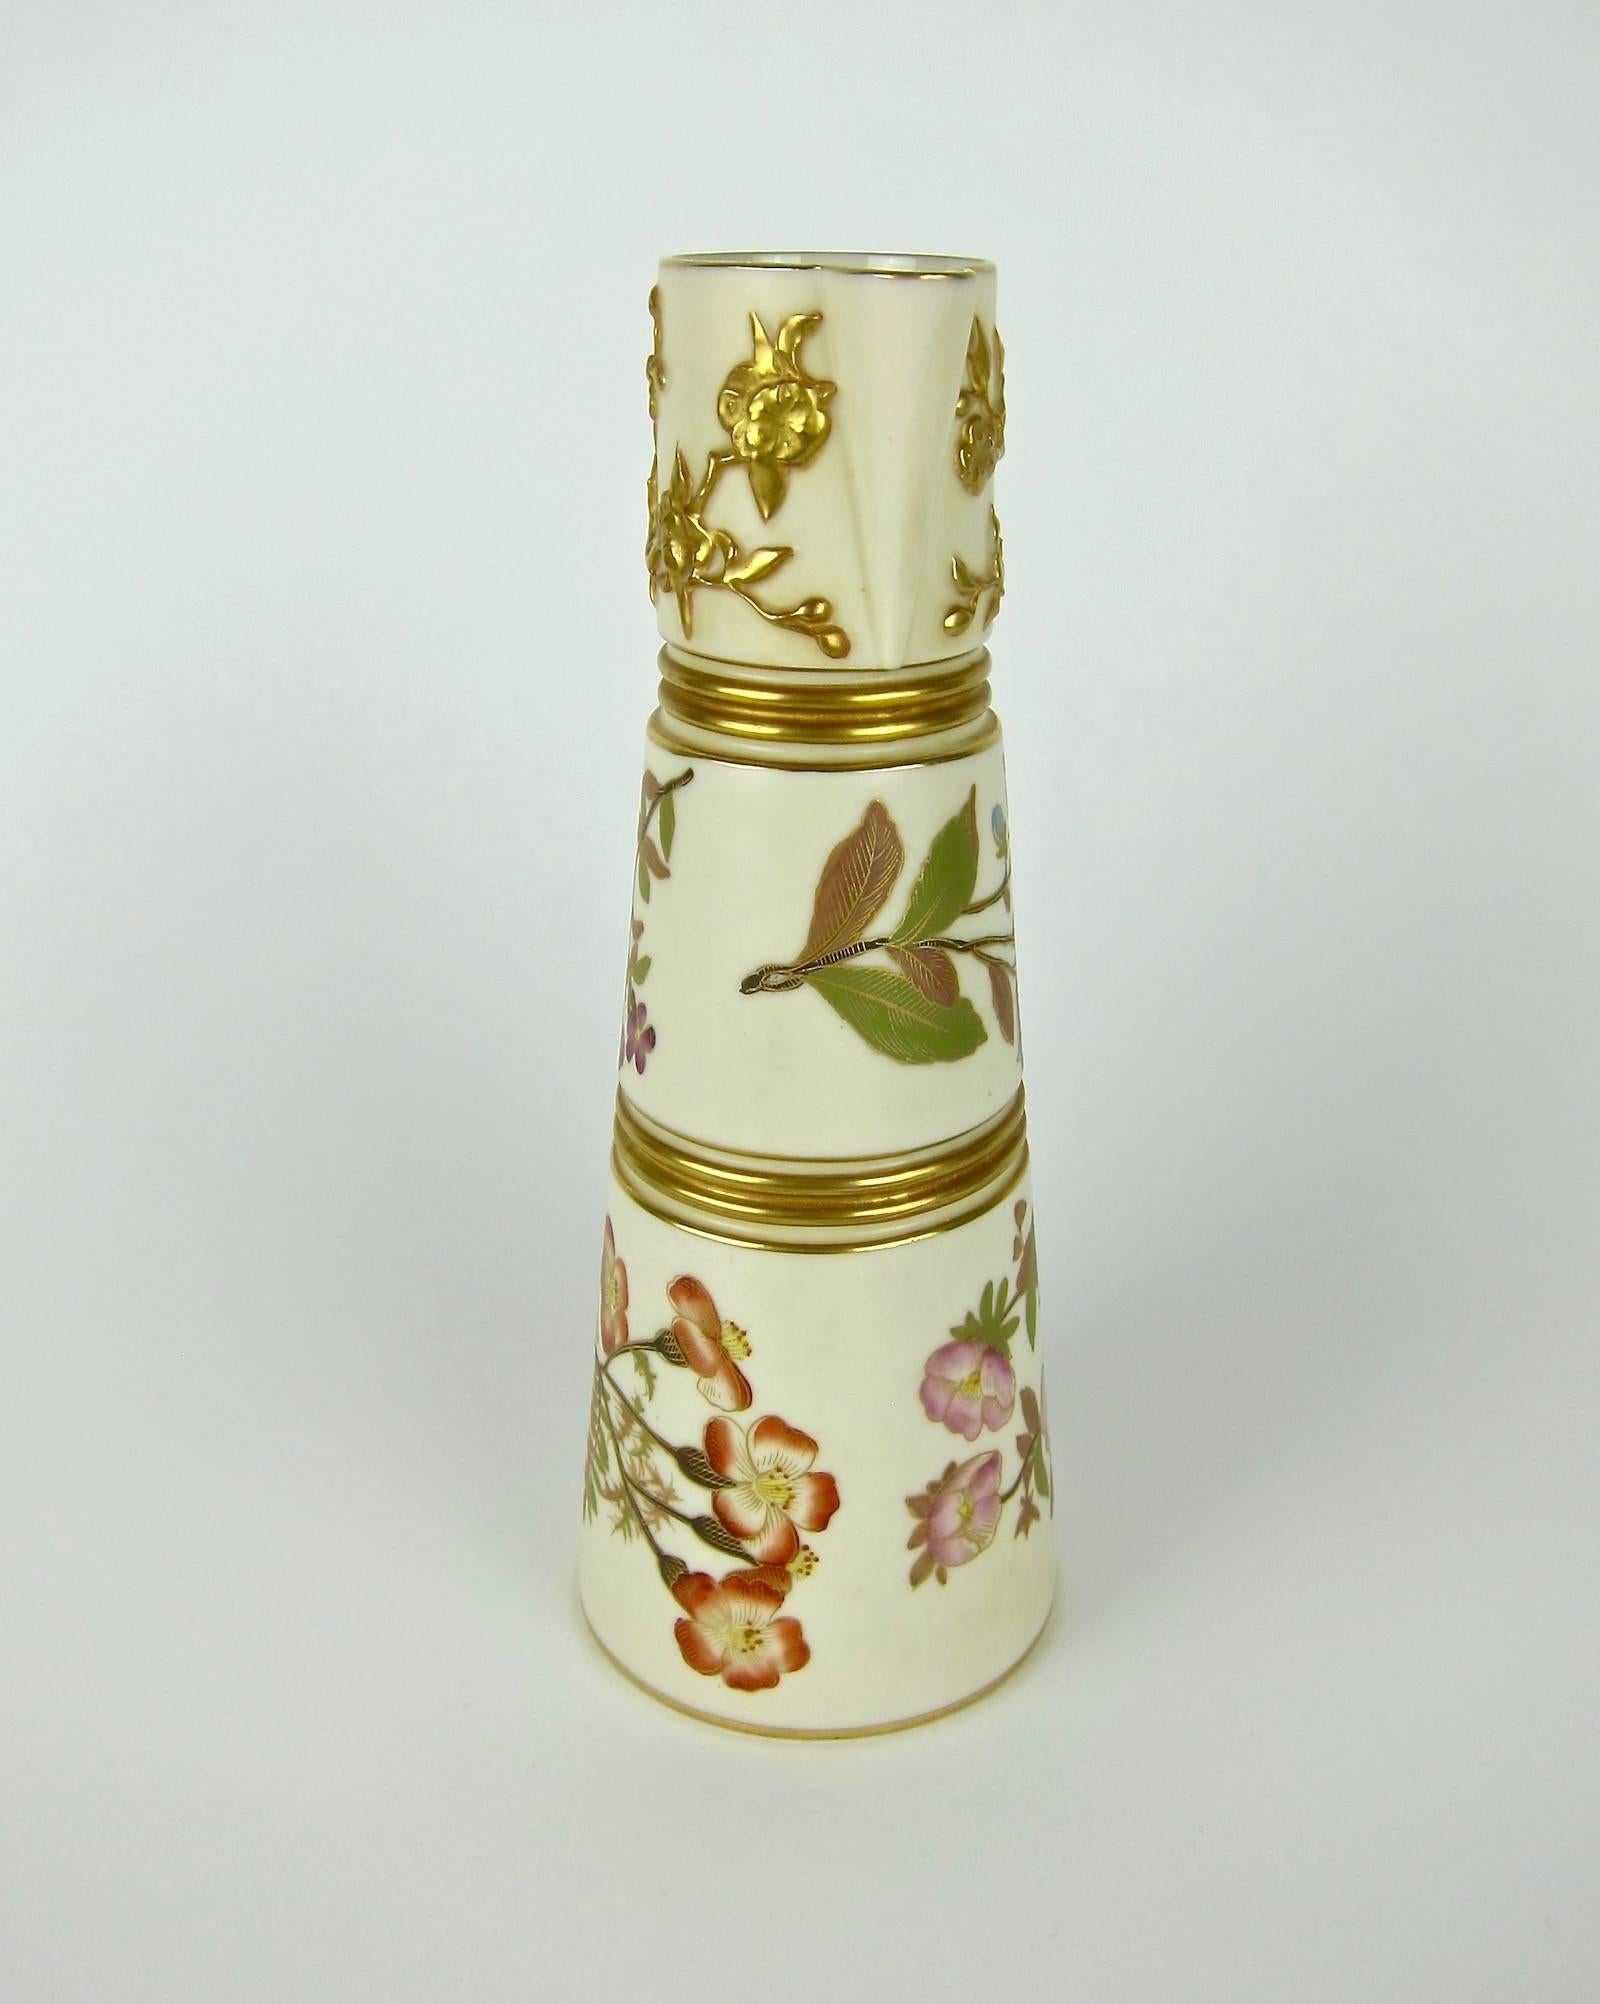 Aesthetic Movement Antique English Royal Worcester Porcelain Ewer, 1884